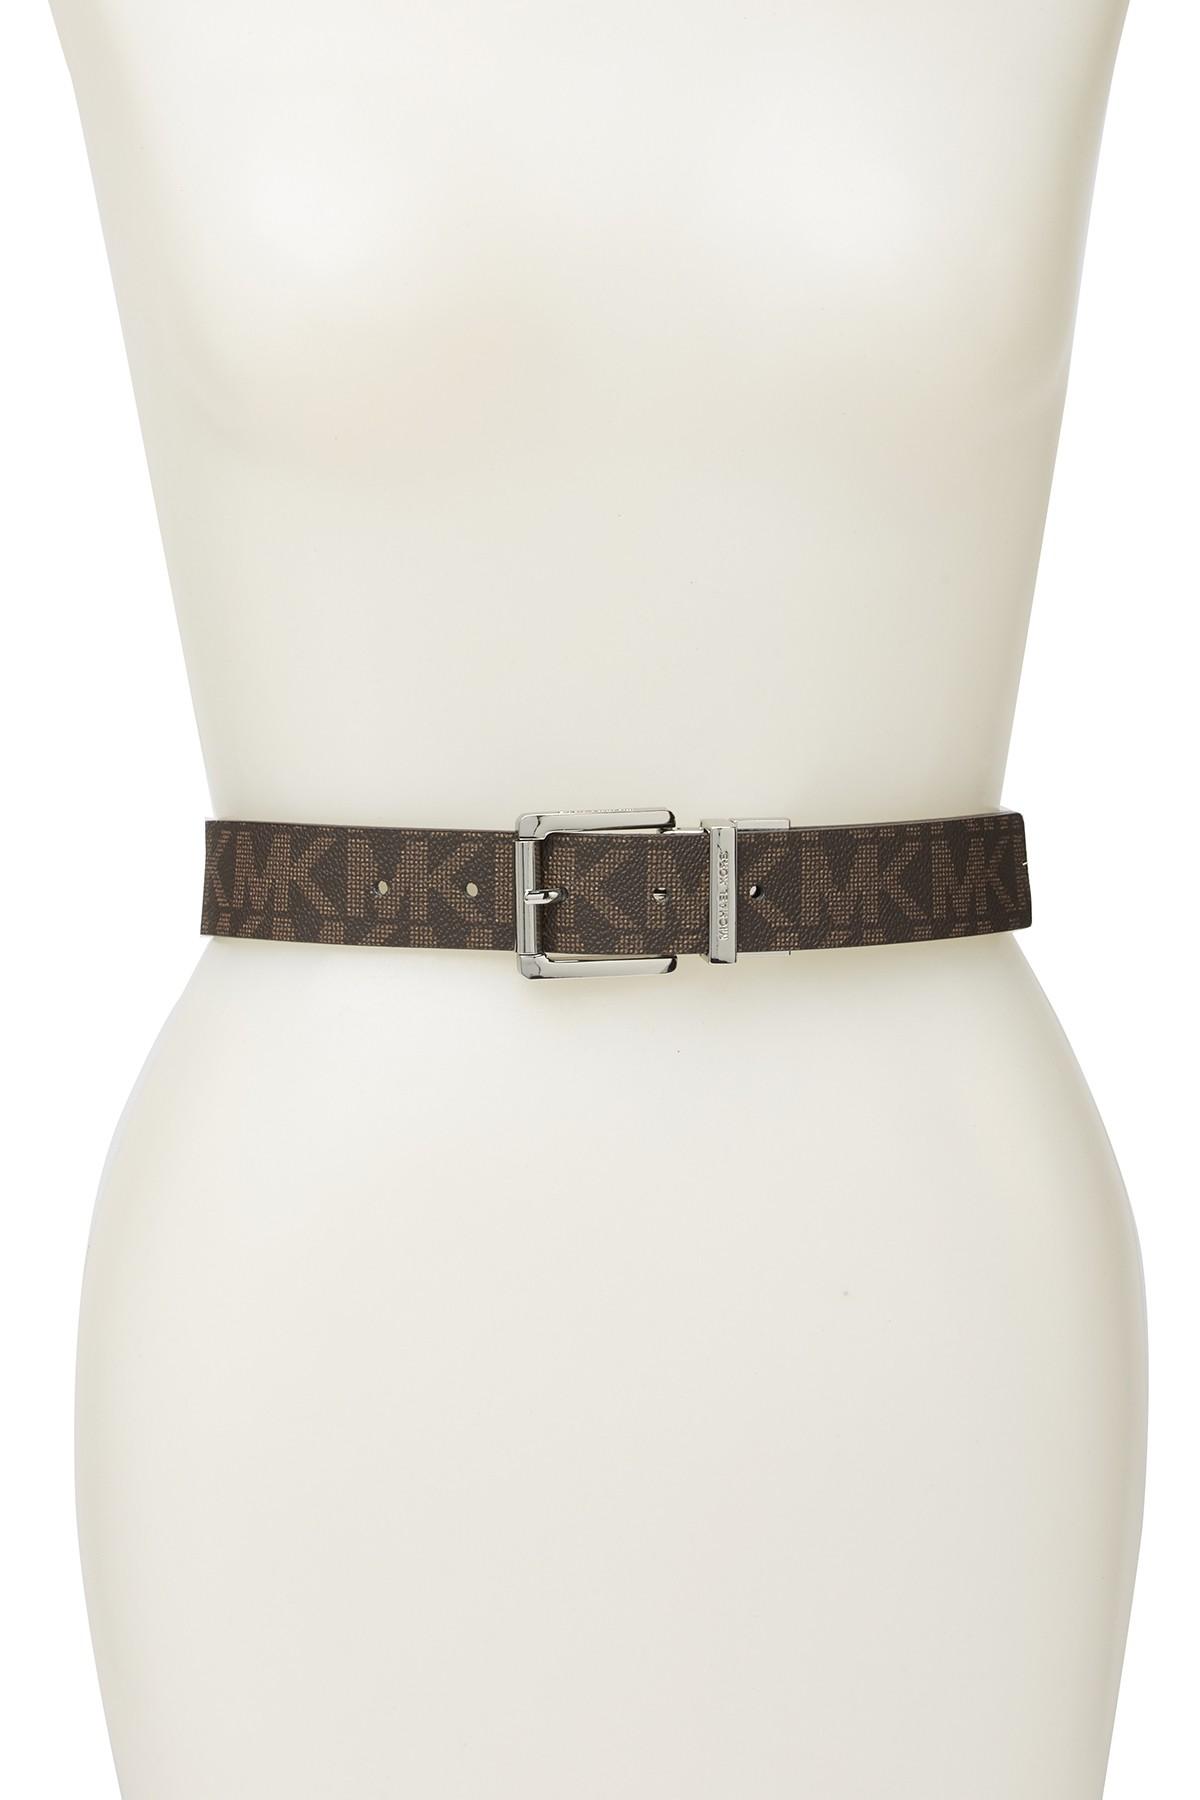 Michael Kors Reversible Logo Belt in Brown - Lyst